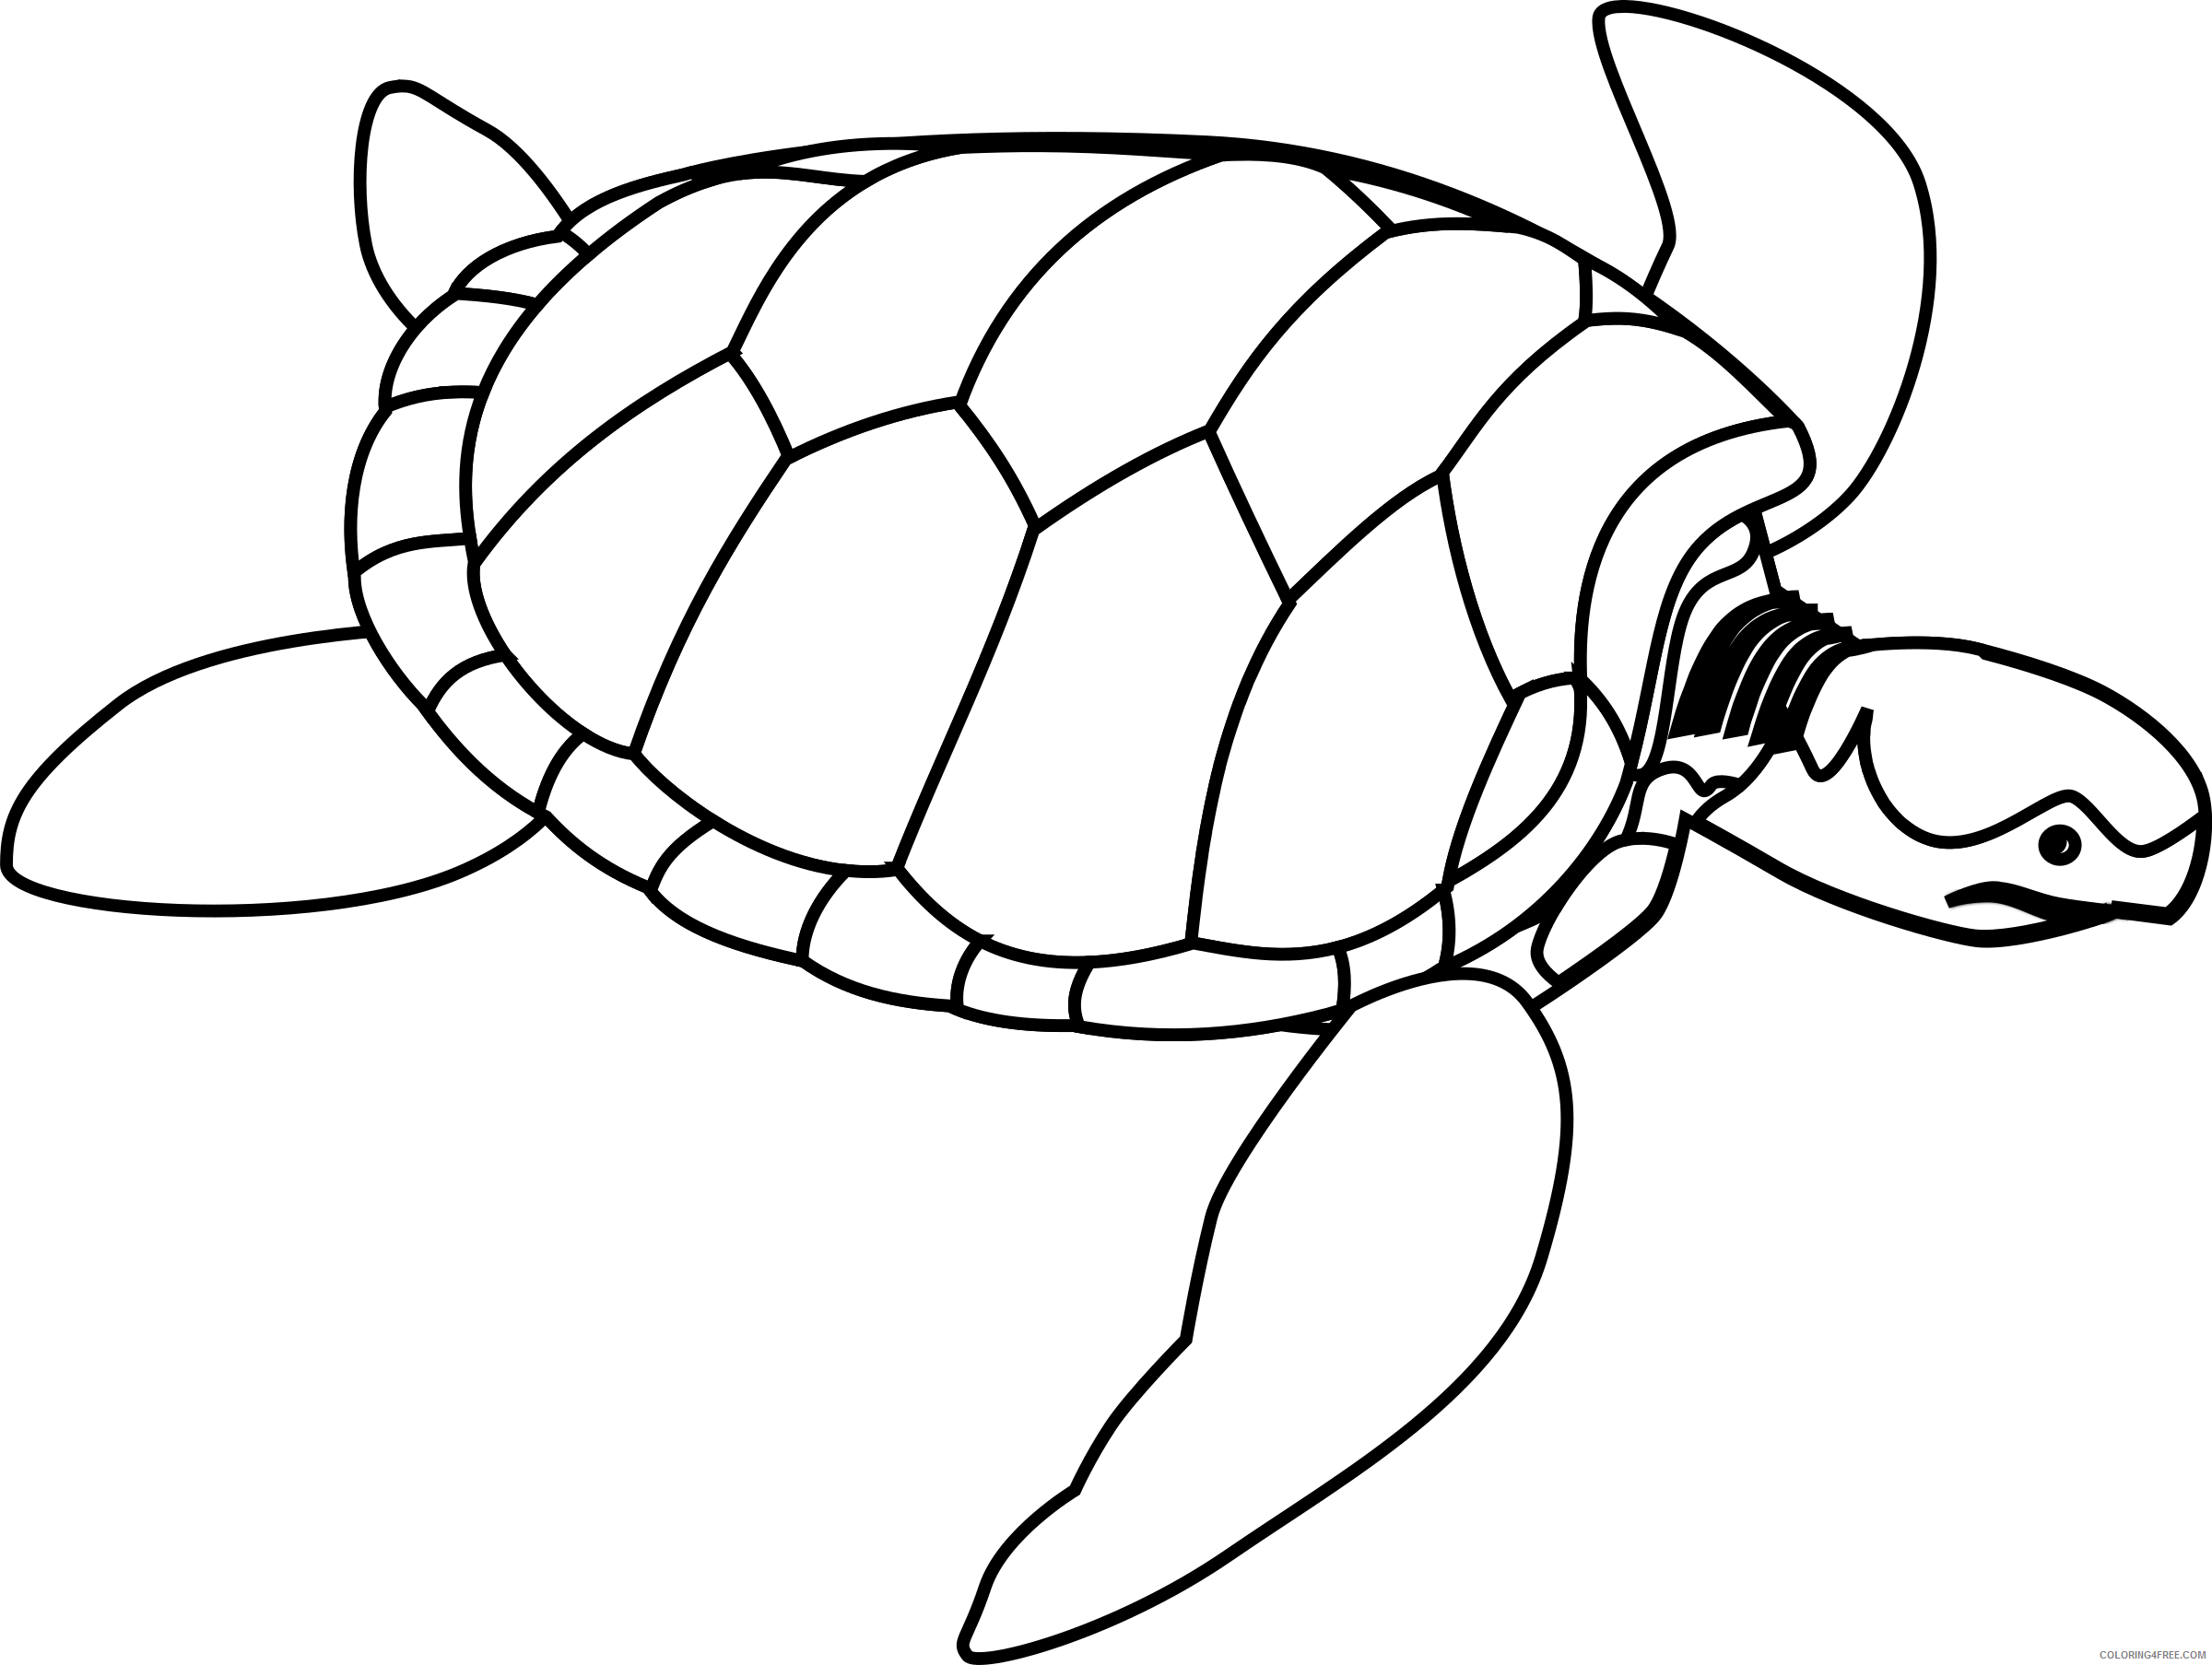 Turtle color. Раскраска черепашка. Черепаха раскраска. Морская черепаха раскраска. Черепаха раскраска для детей.